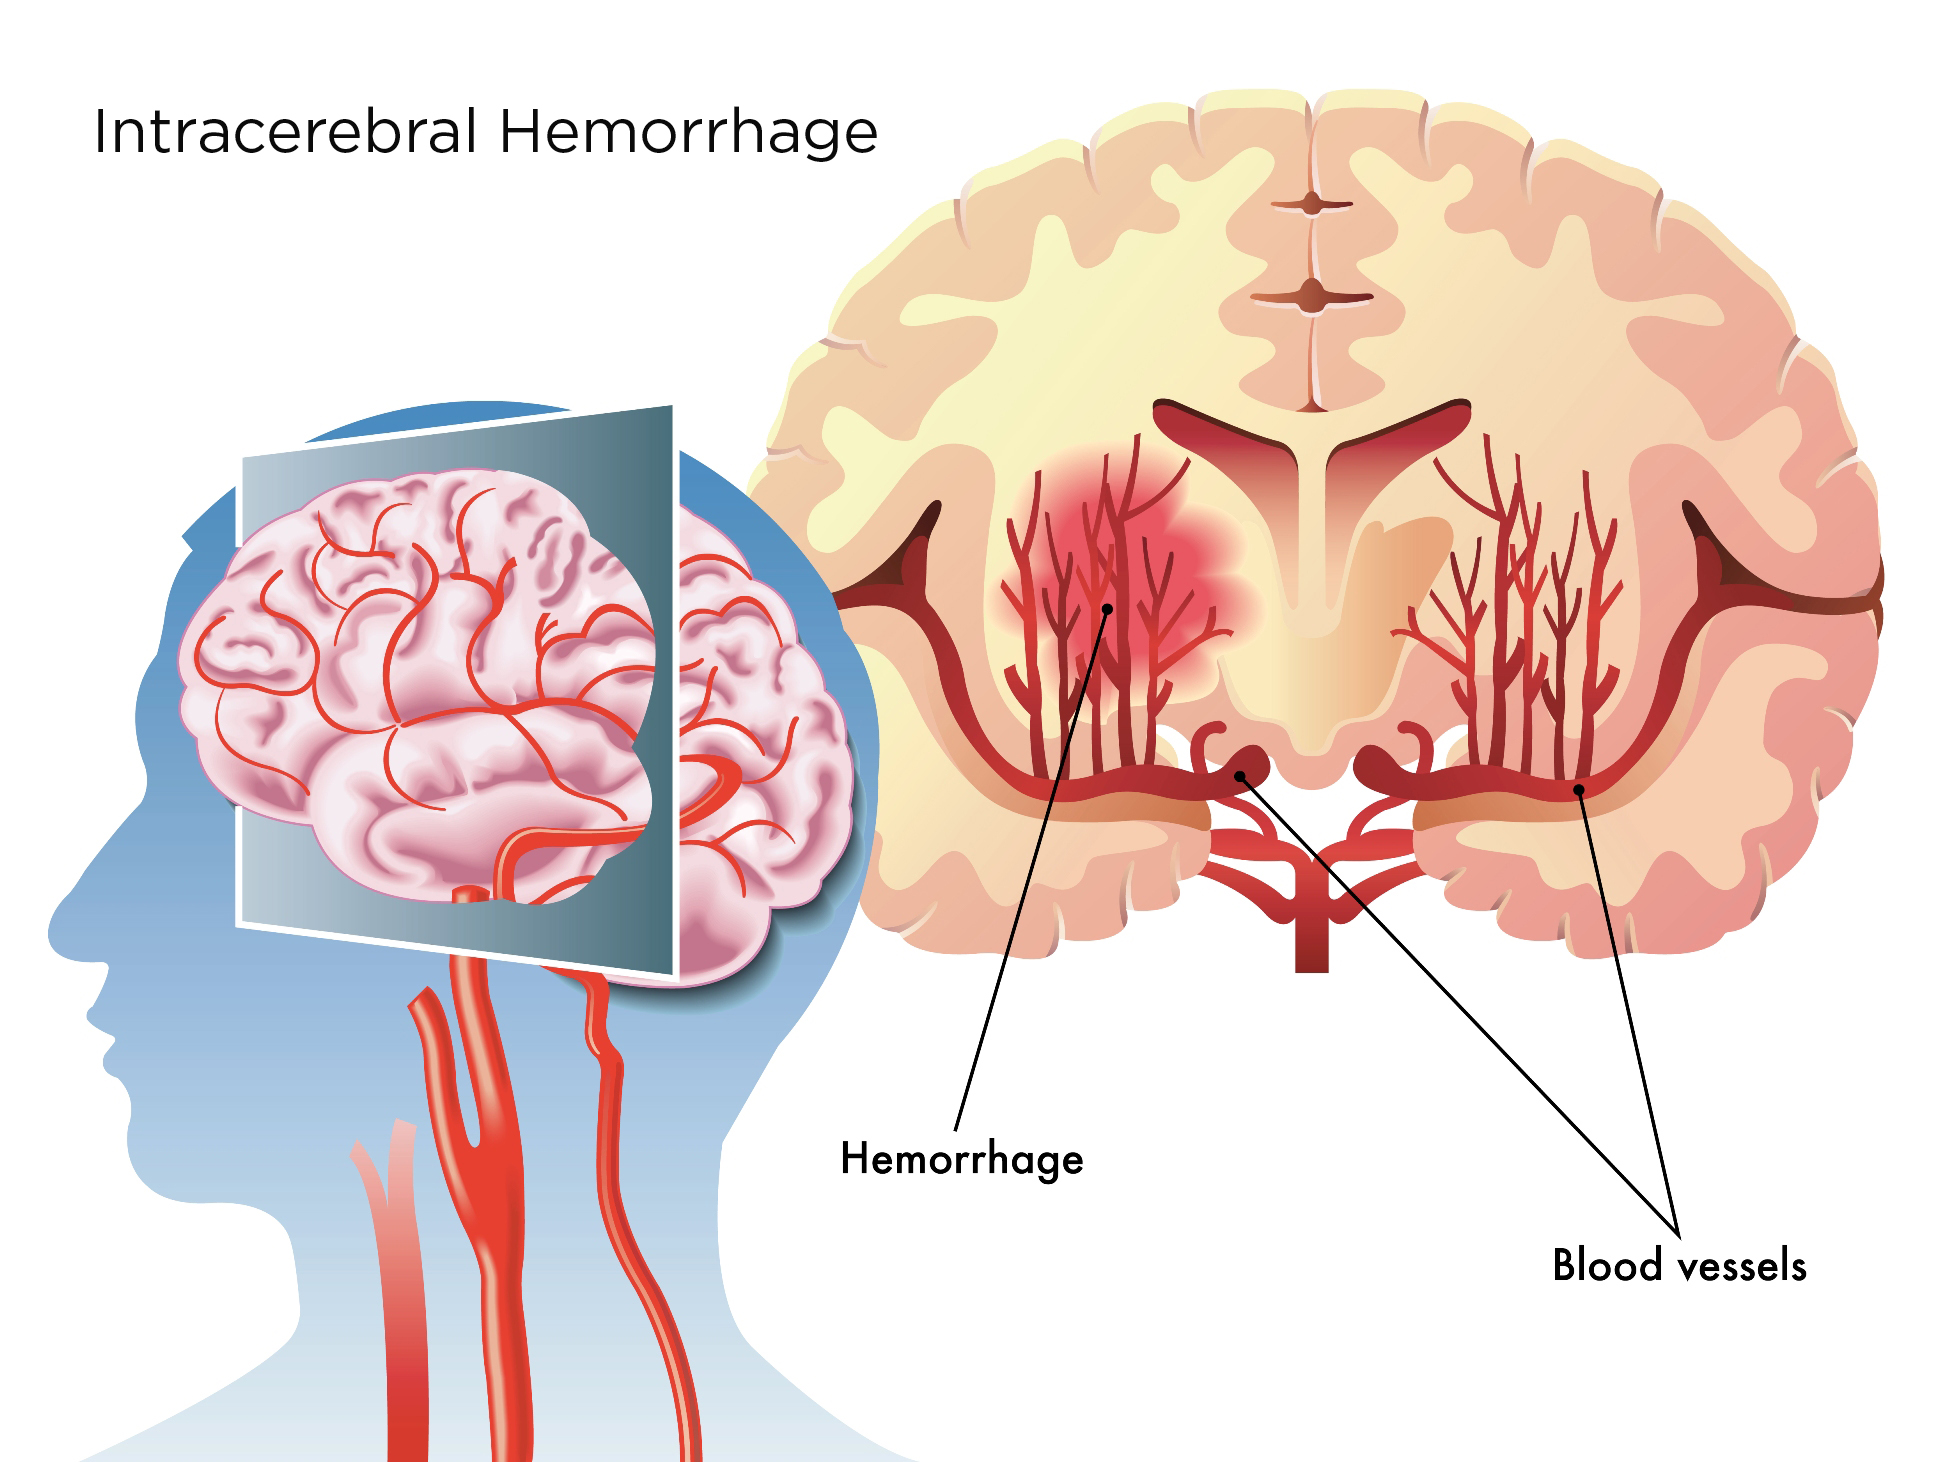 intraparenchymal hemorrhage